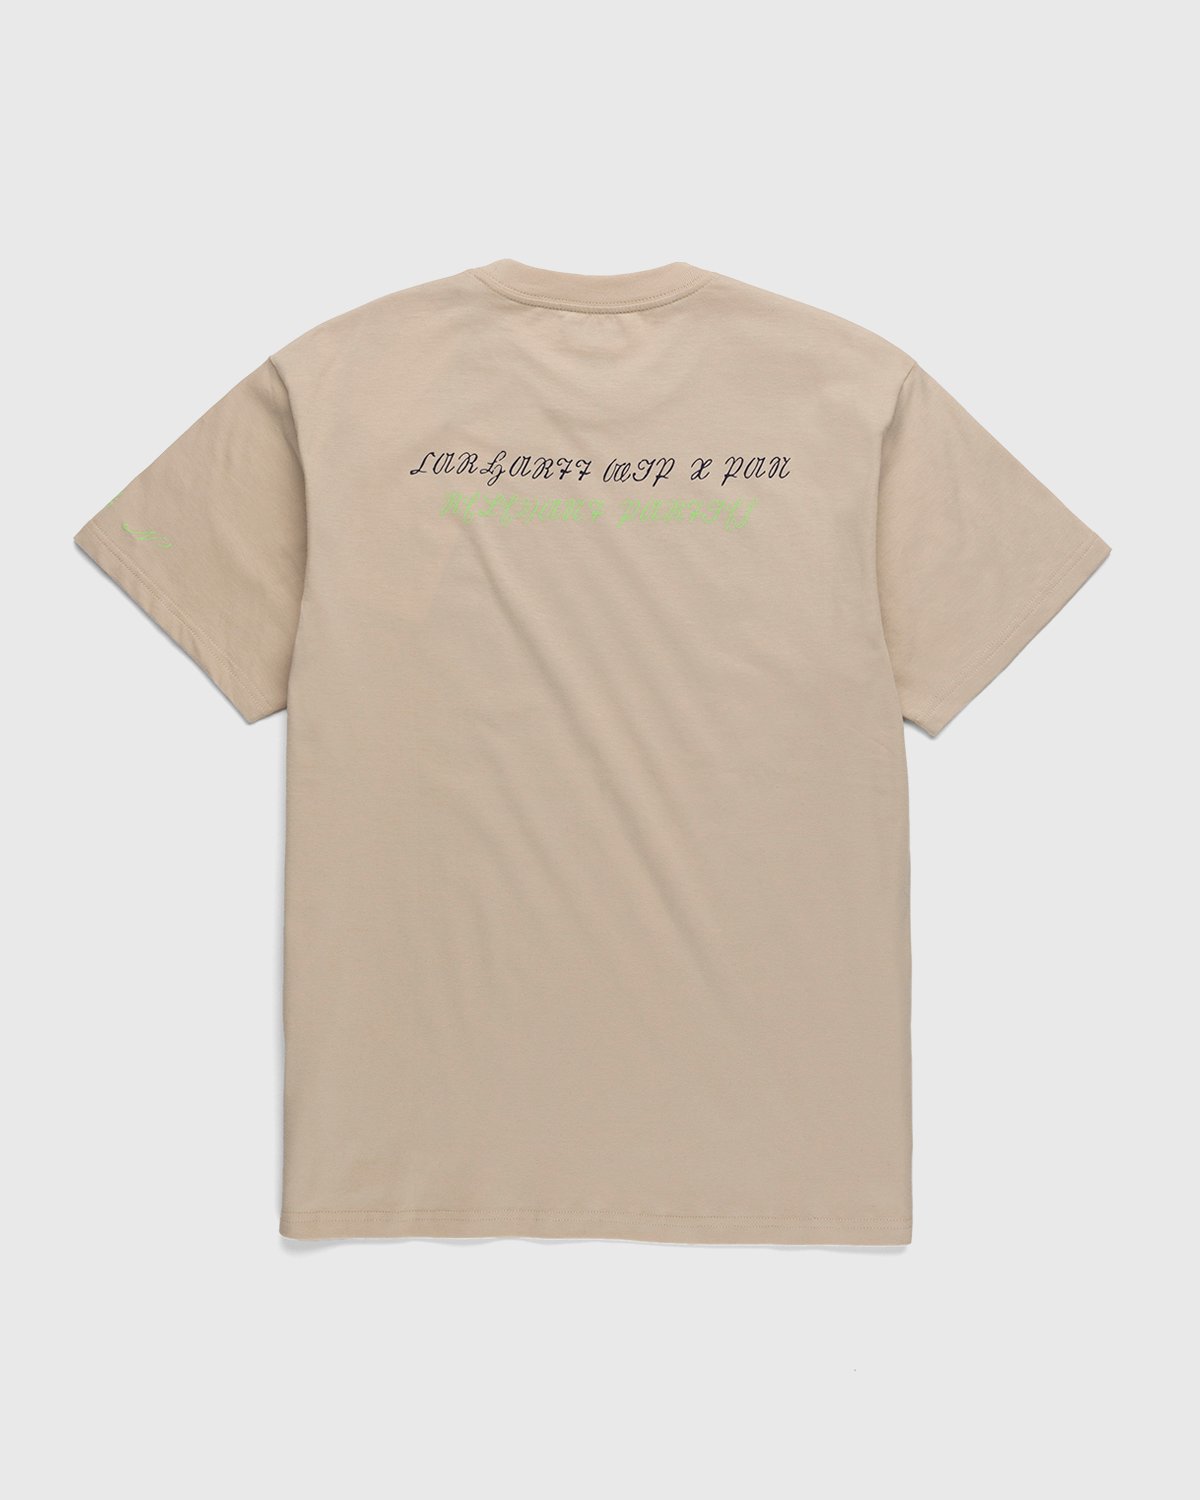 Carhartt WIP - Pan T-Shirt Sand - Clothing - Beige - Image 2